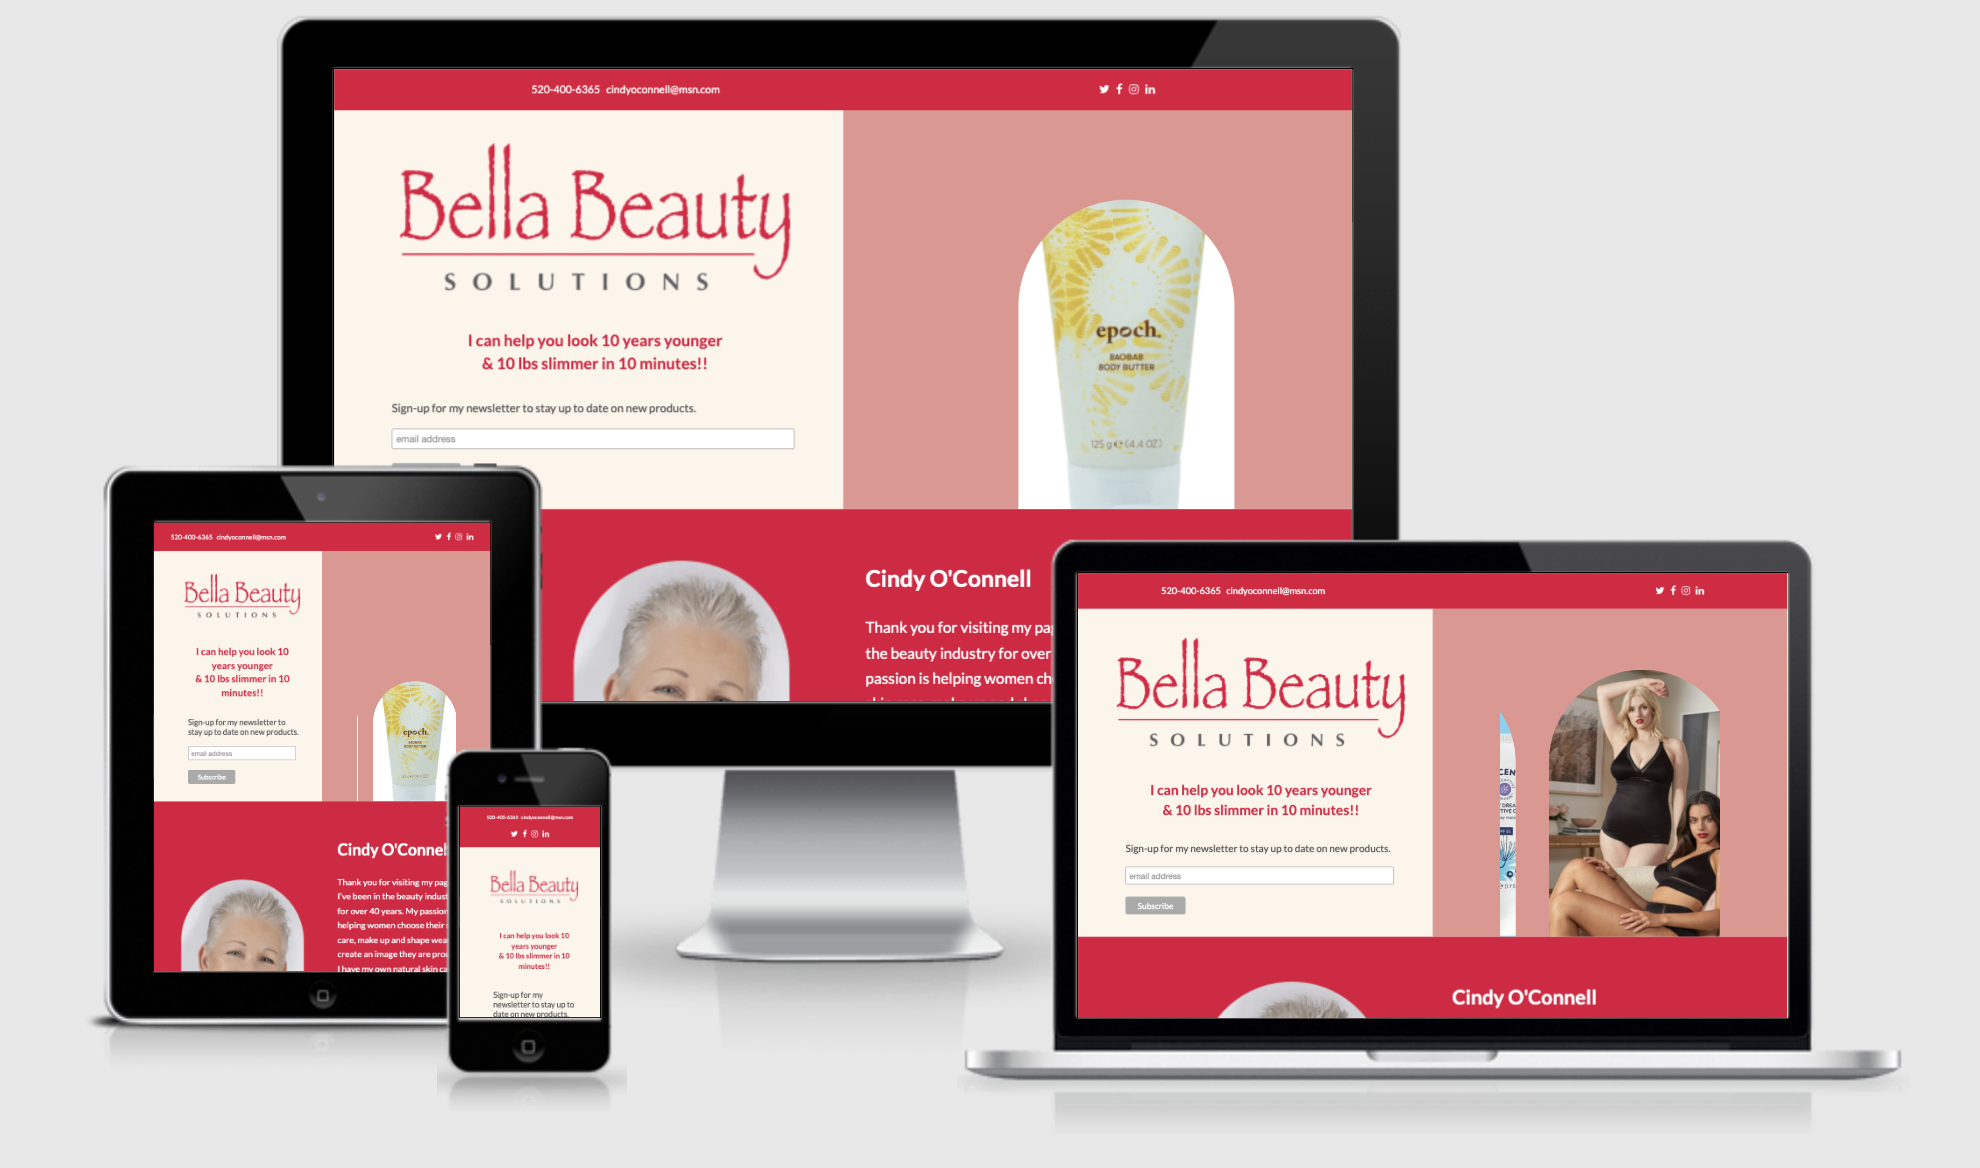 Bella Beauty Solutions website design image